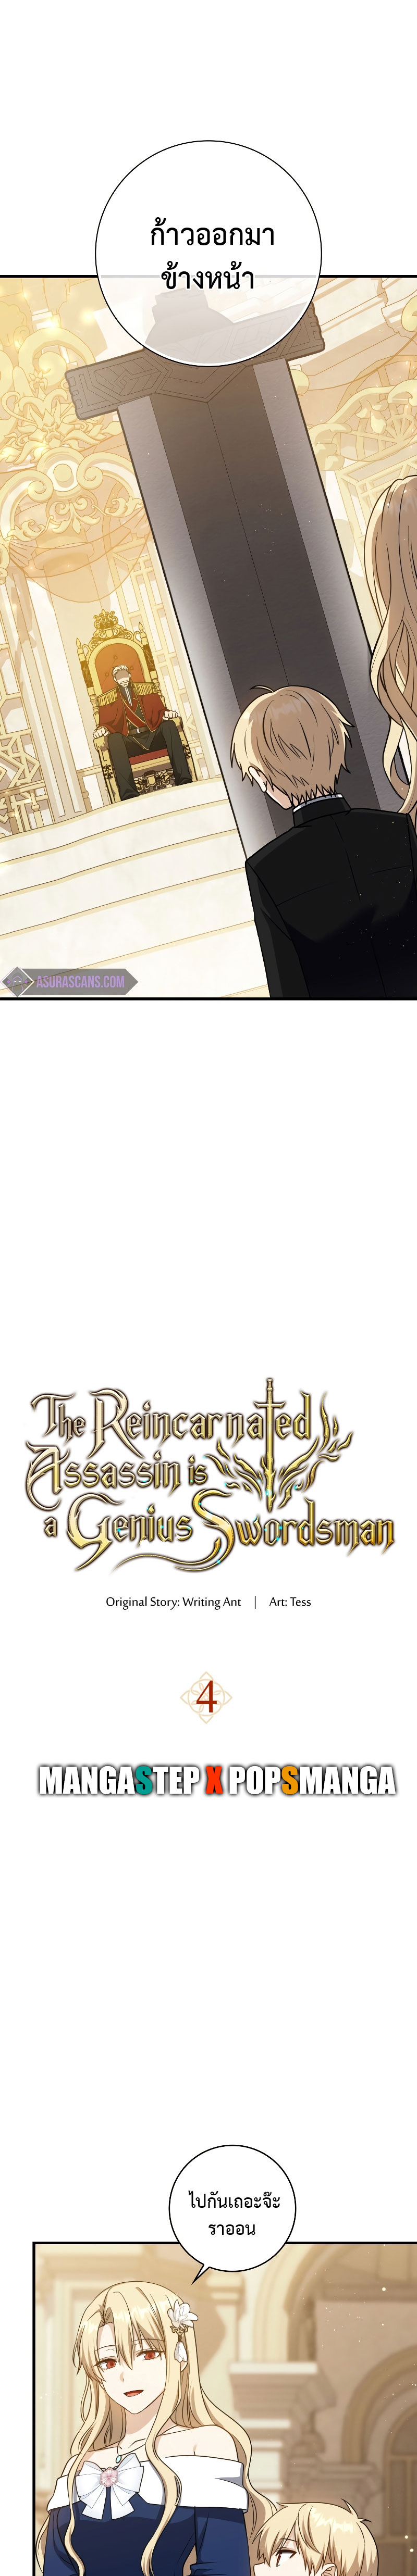 The Reincarnated Assassin Is a Genius Swordsman 4 (7)